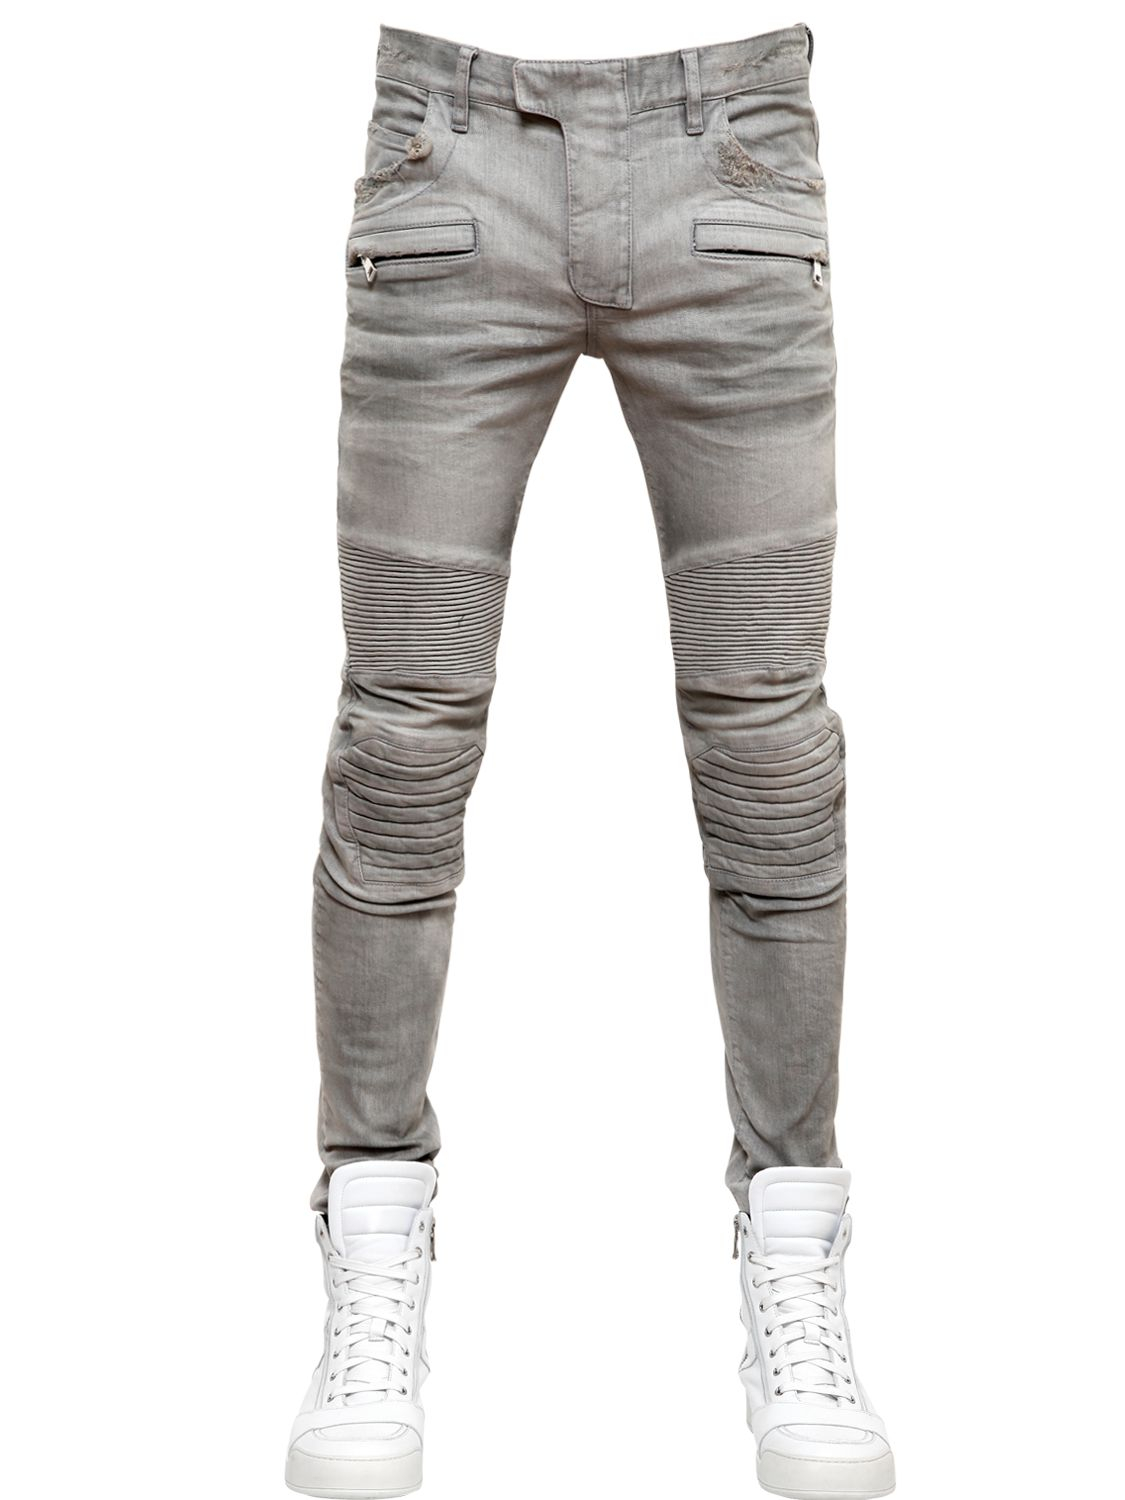 Gray Balmain Jeans United Kingdom, SAVE 40% - mpgc.net